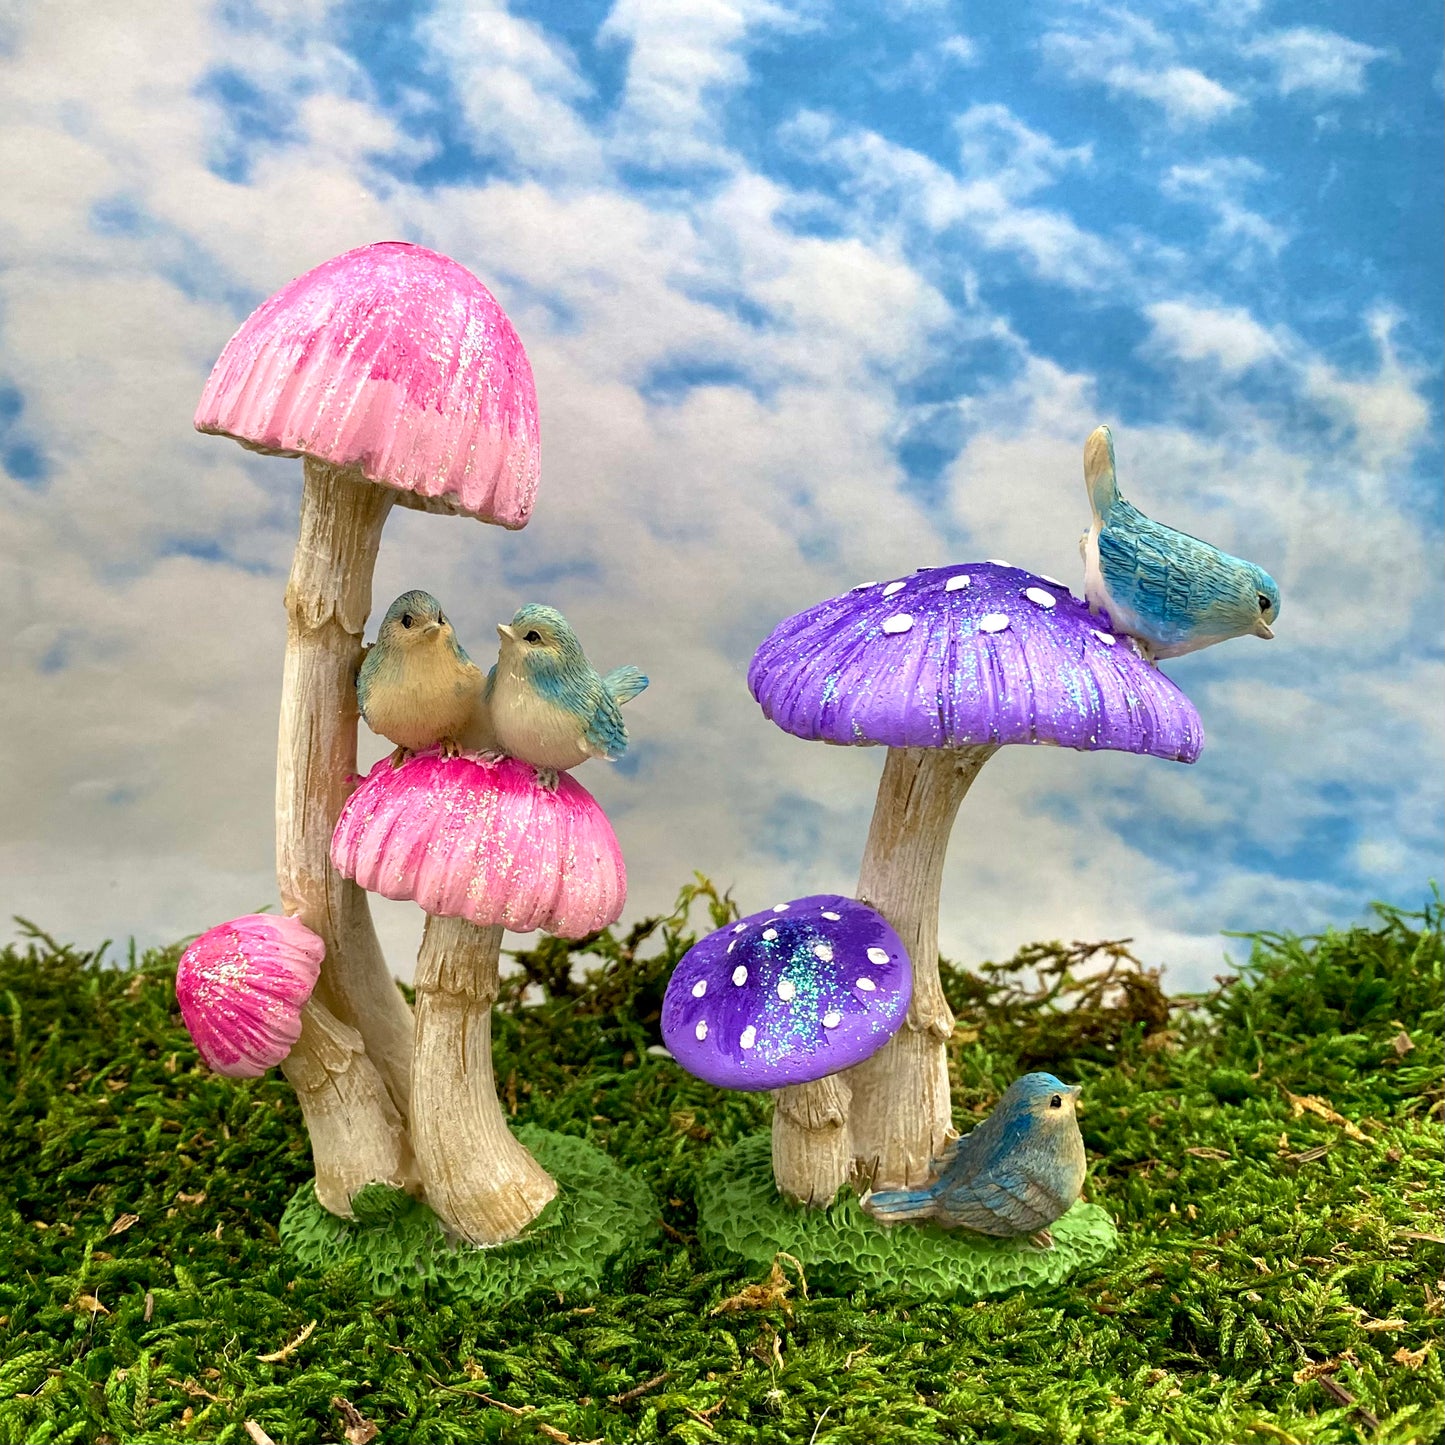 Pink And Purple Mushrooms With Blue Birds, Australian Fairy Gardens, Mushrooms